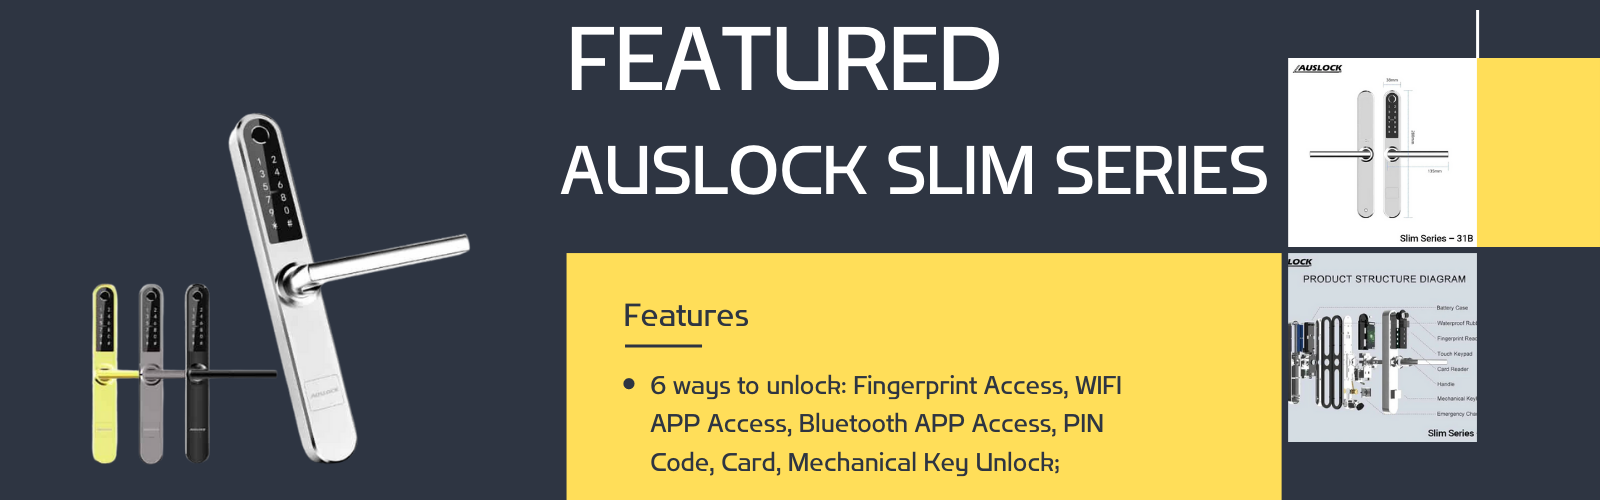 Auslock Slim Series